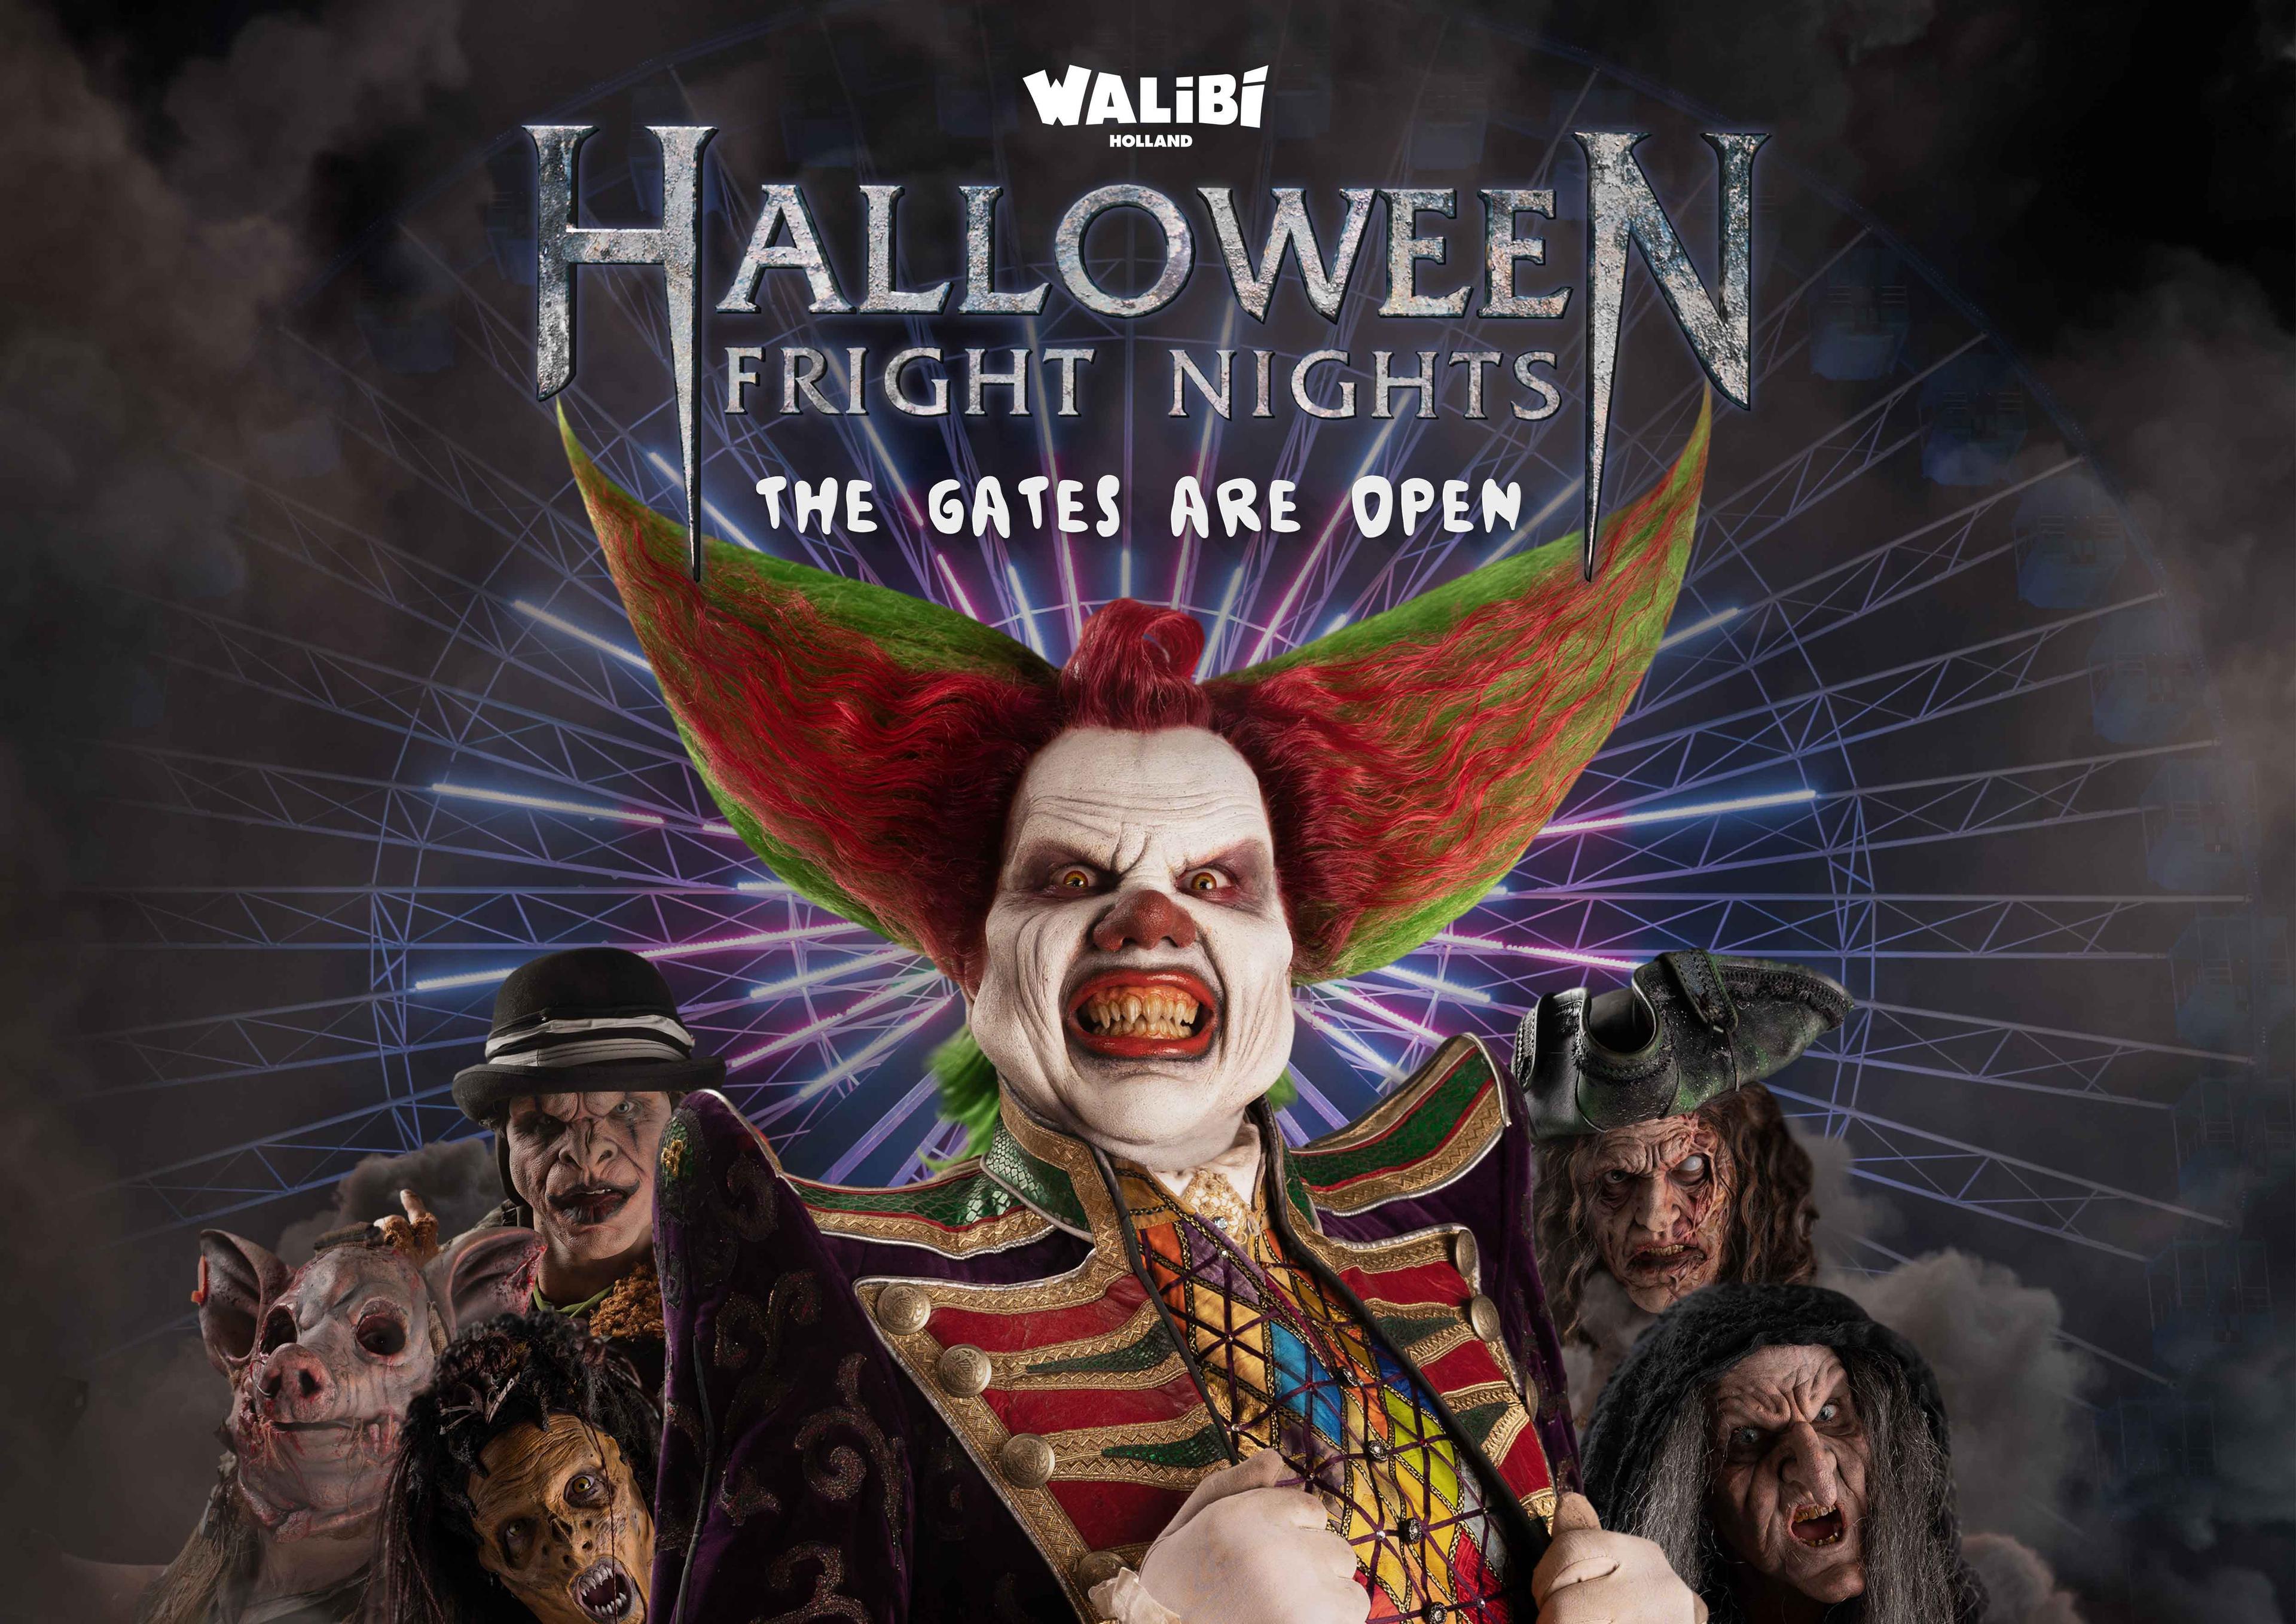 Halloween Fright Nights in Walibi Holland